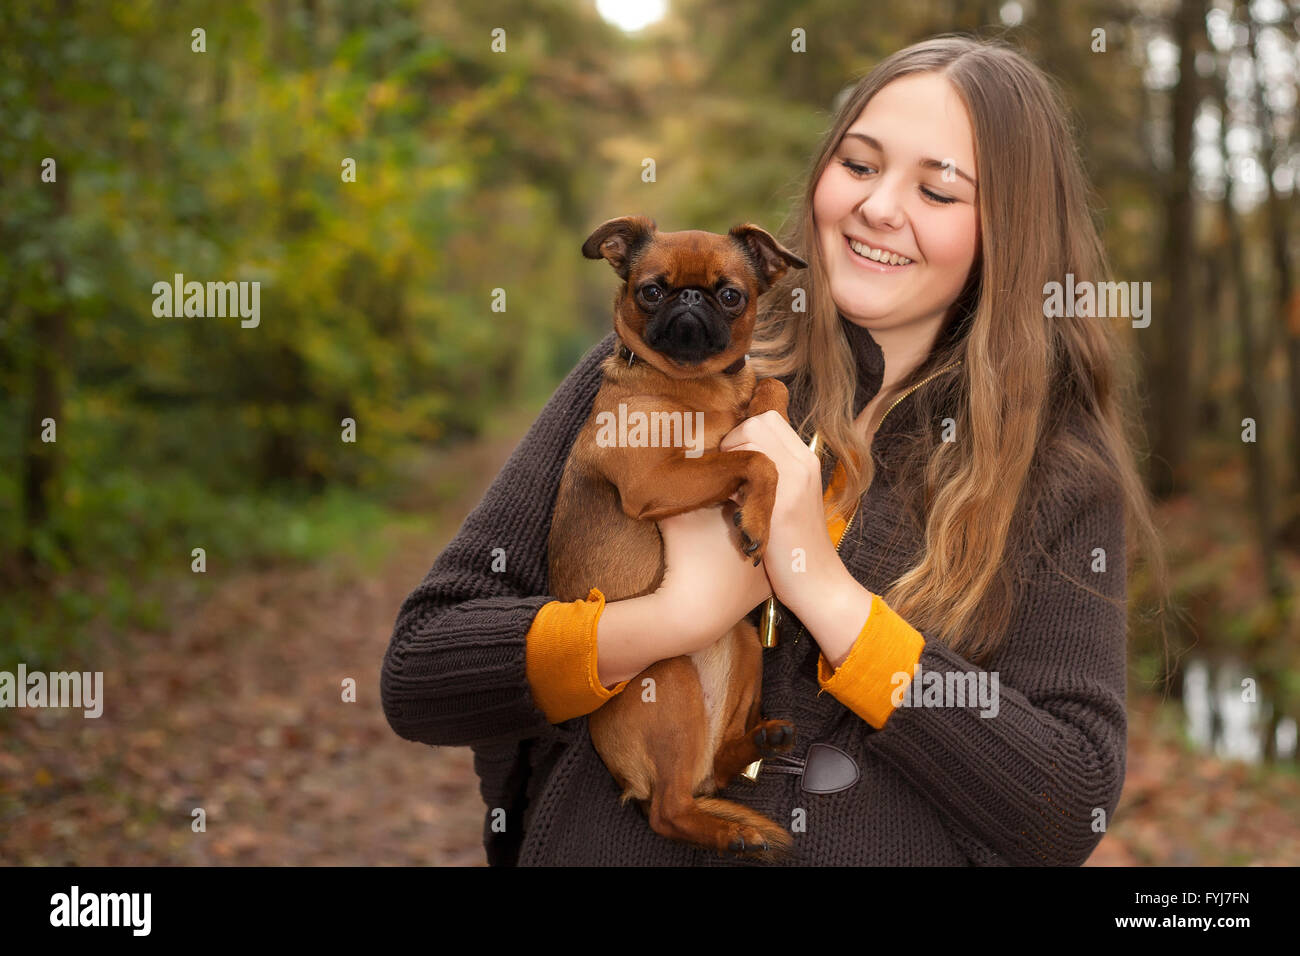 Girl with a nice dog Stock Photo